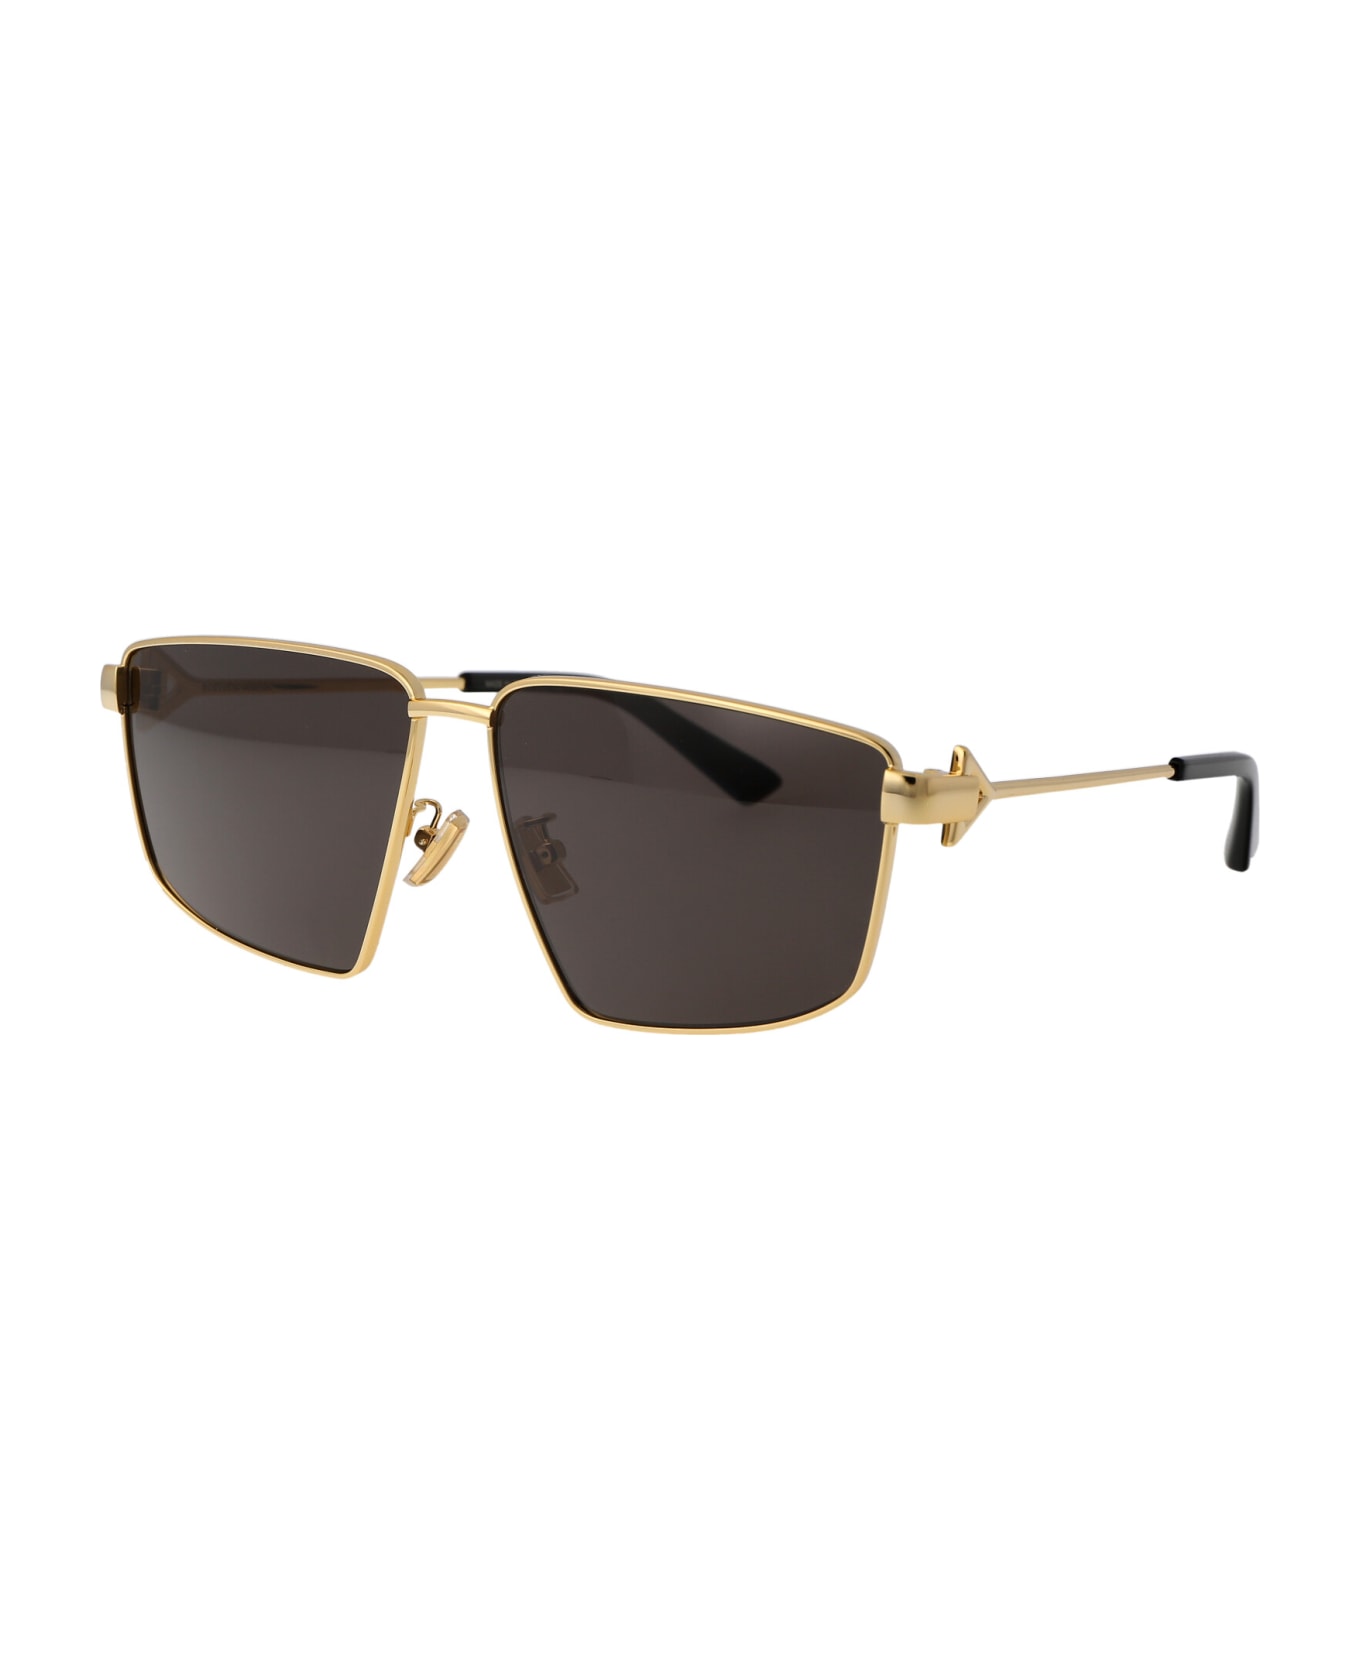 Bottega Veneta Eyewear Bv1223s Sunglasses - 002 GOLD GOLD GREY